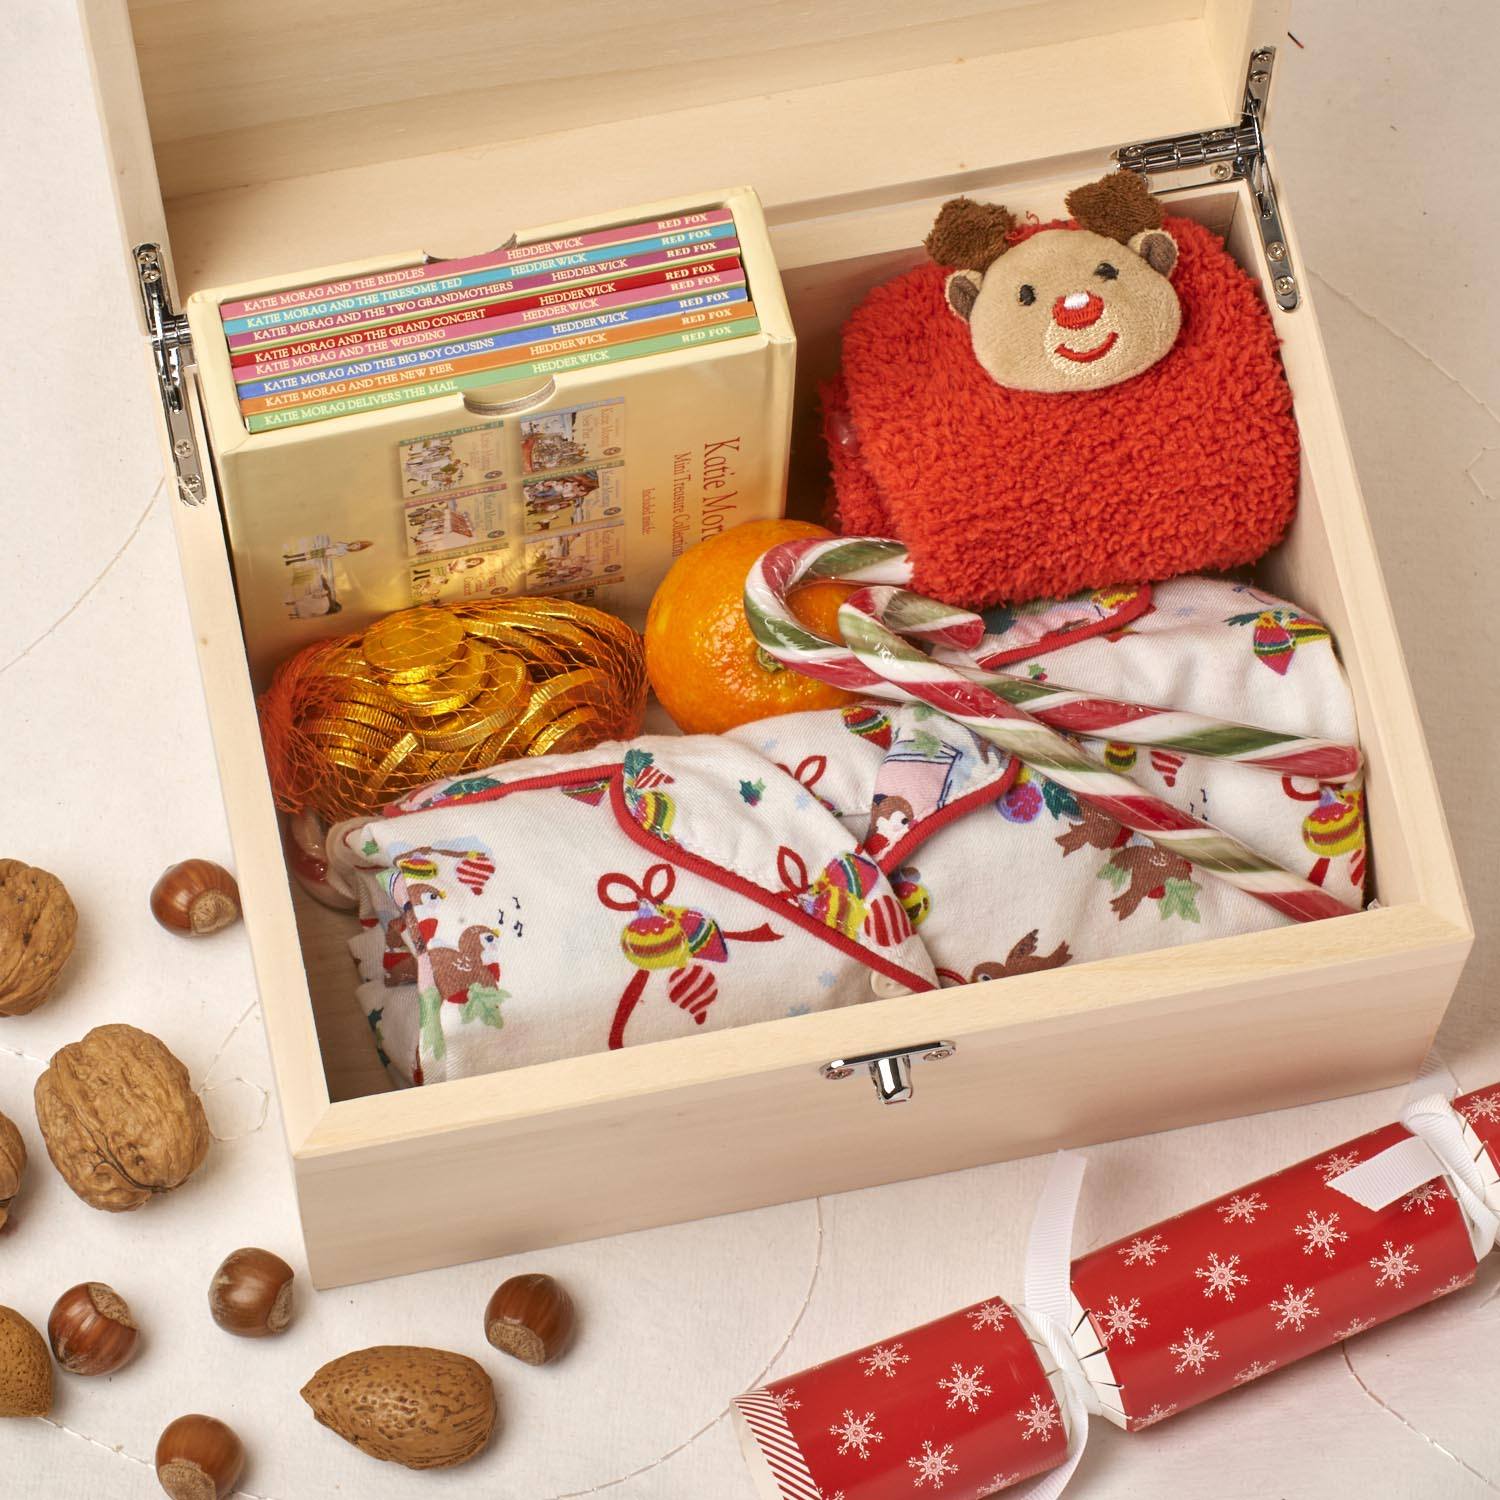 Christmas Box - Personalised Wooden Christmas Eve Box - Train Design